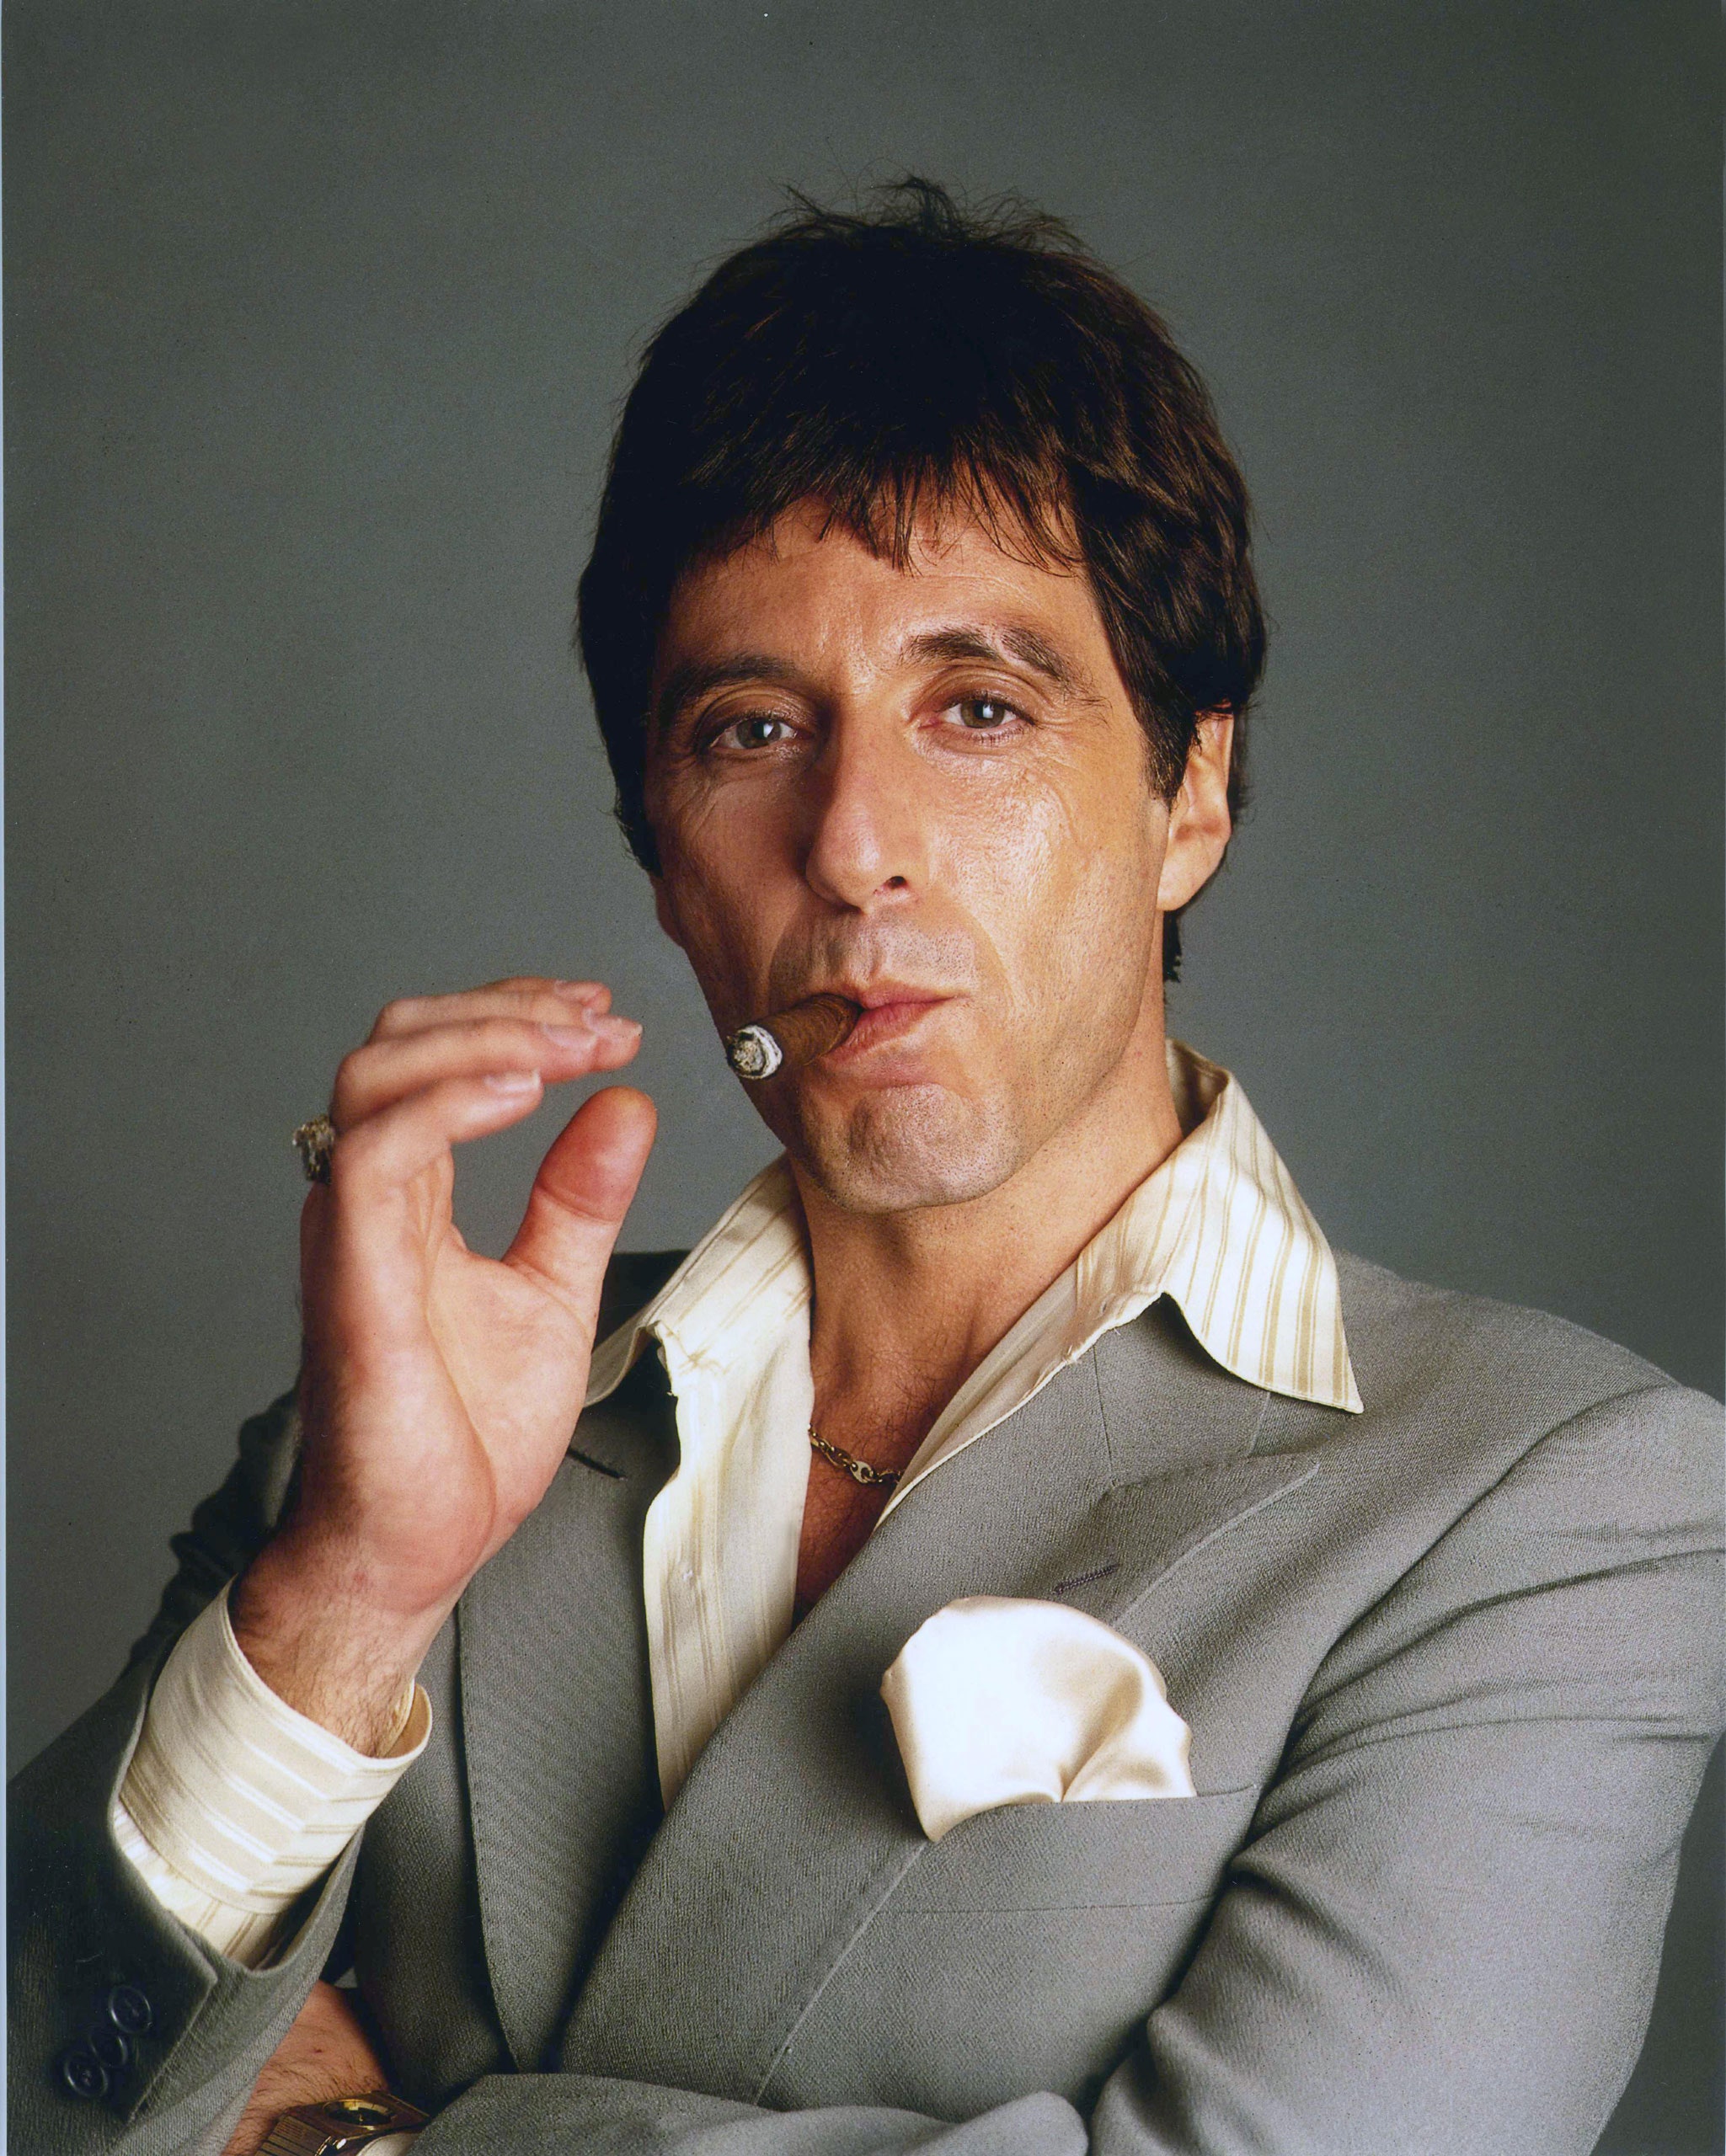 Al Pacino is not dead